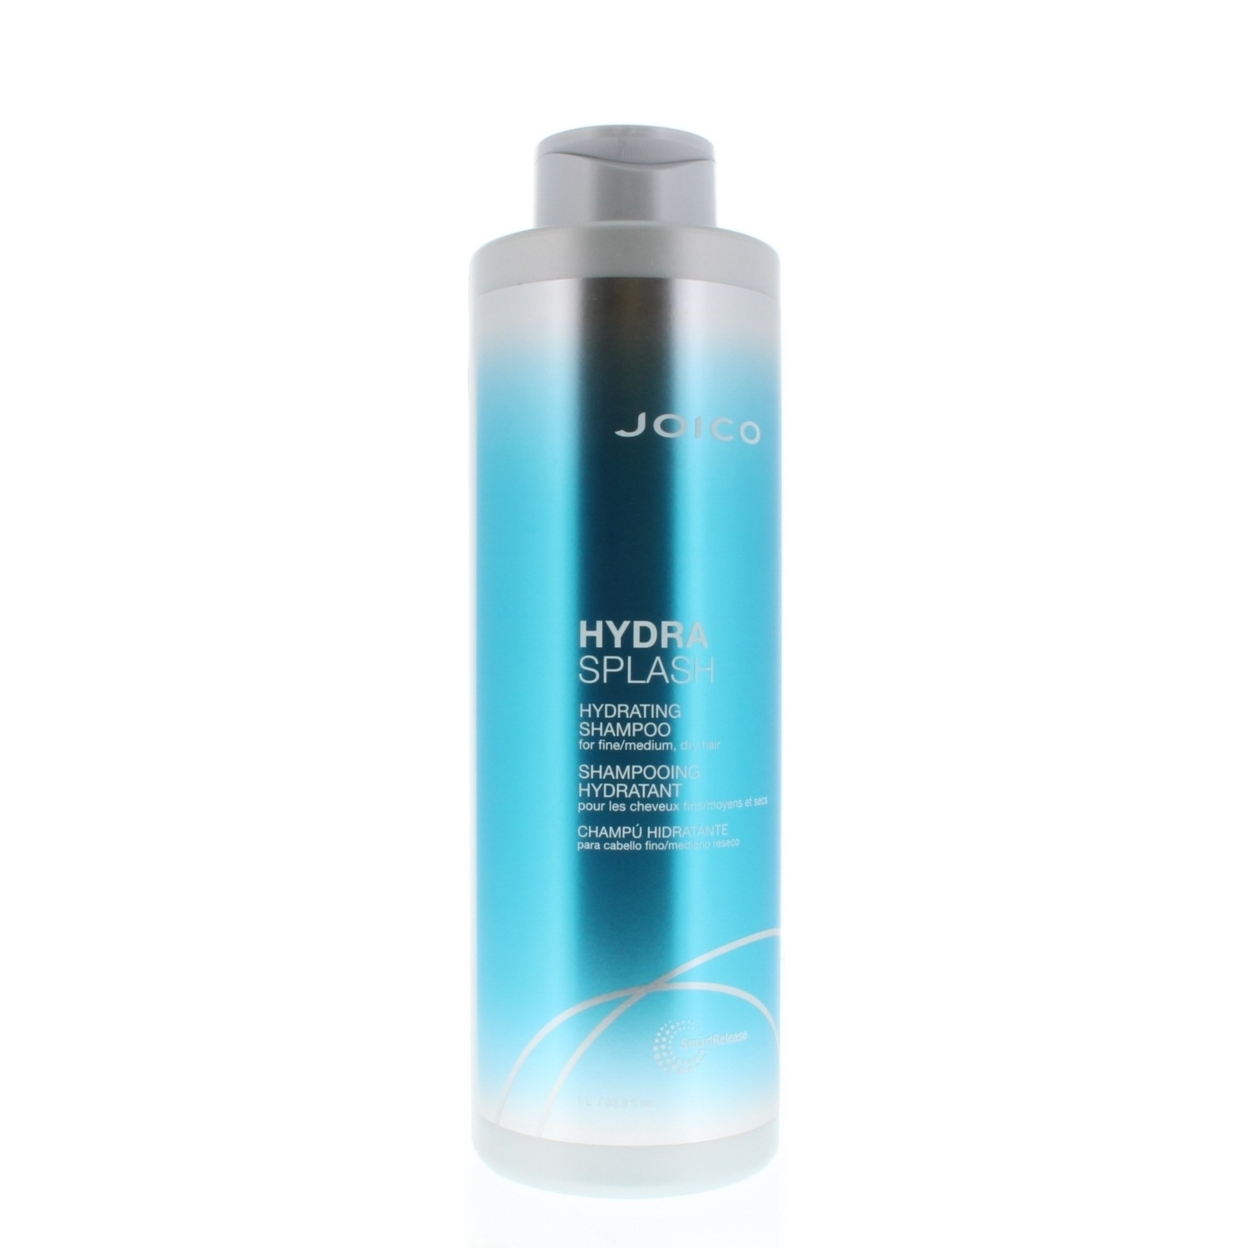 Joico HydraSplash Hydrating Shampoo 33.8 oz - image 2 of 3